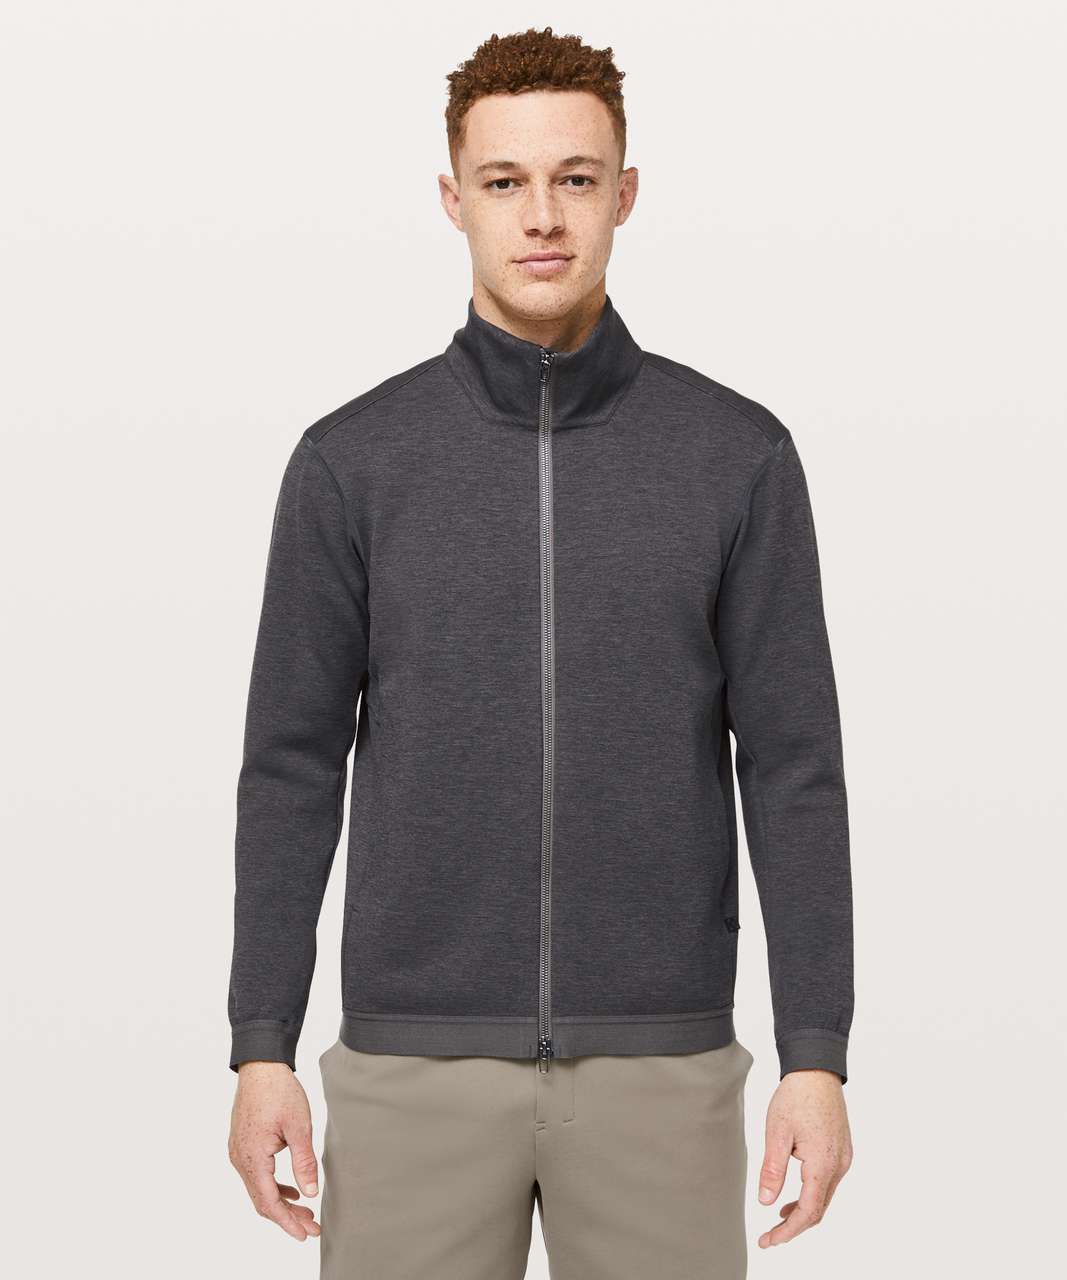 Lululemon athletica Textured Full-Zip Hooded Jacket, Men's Coats & Jackets